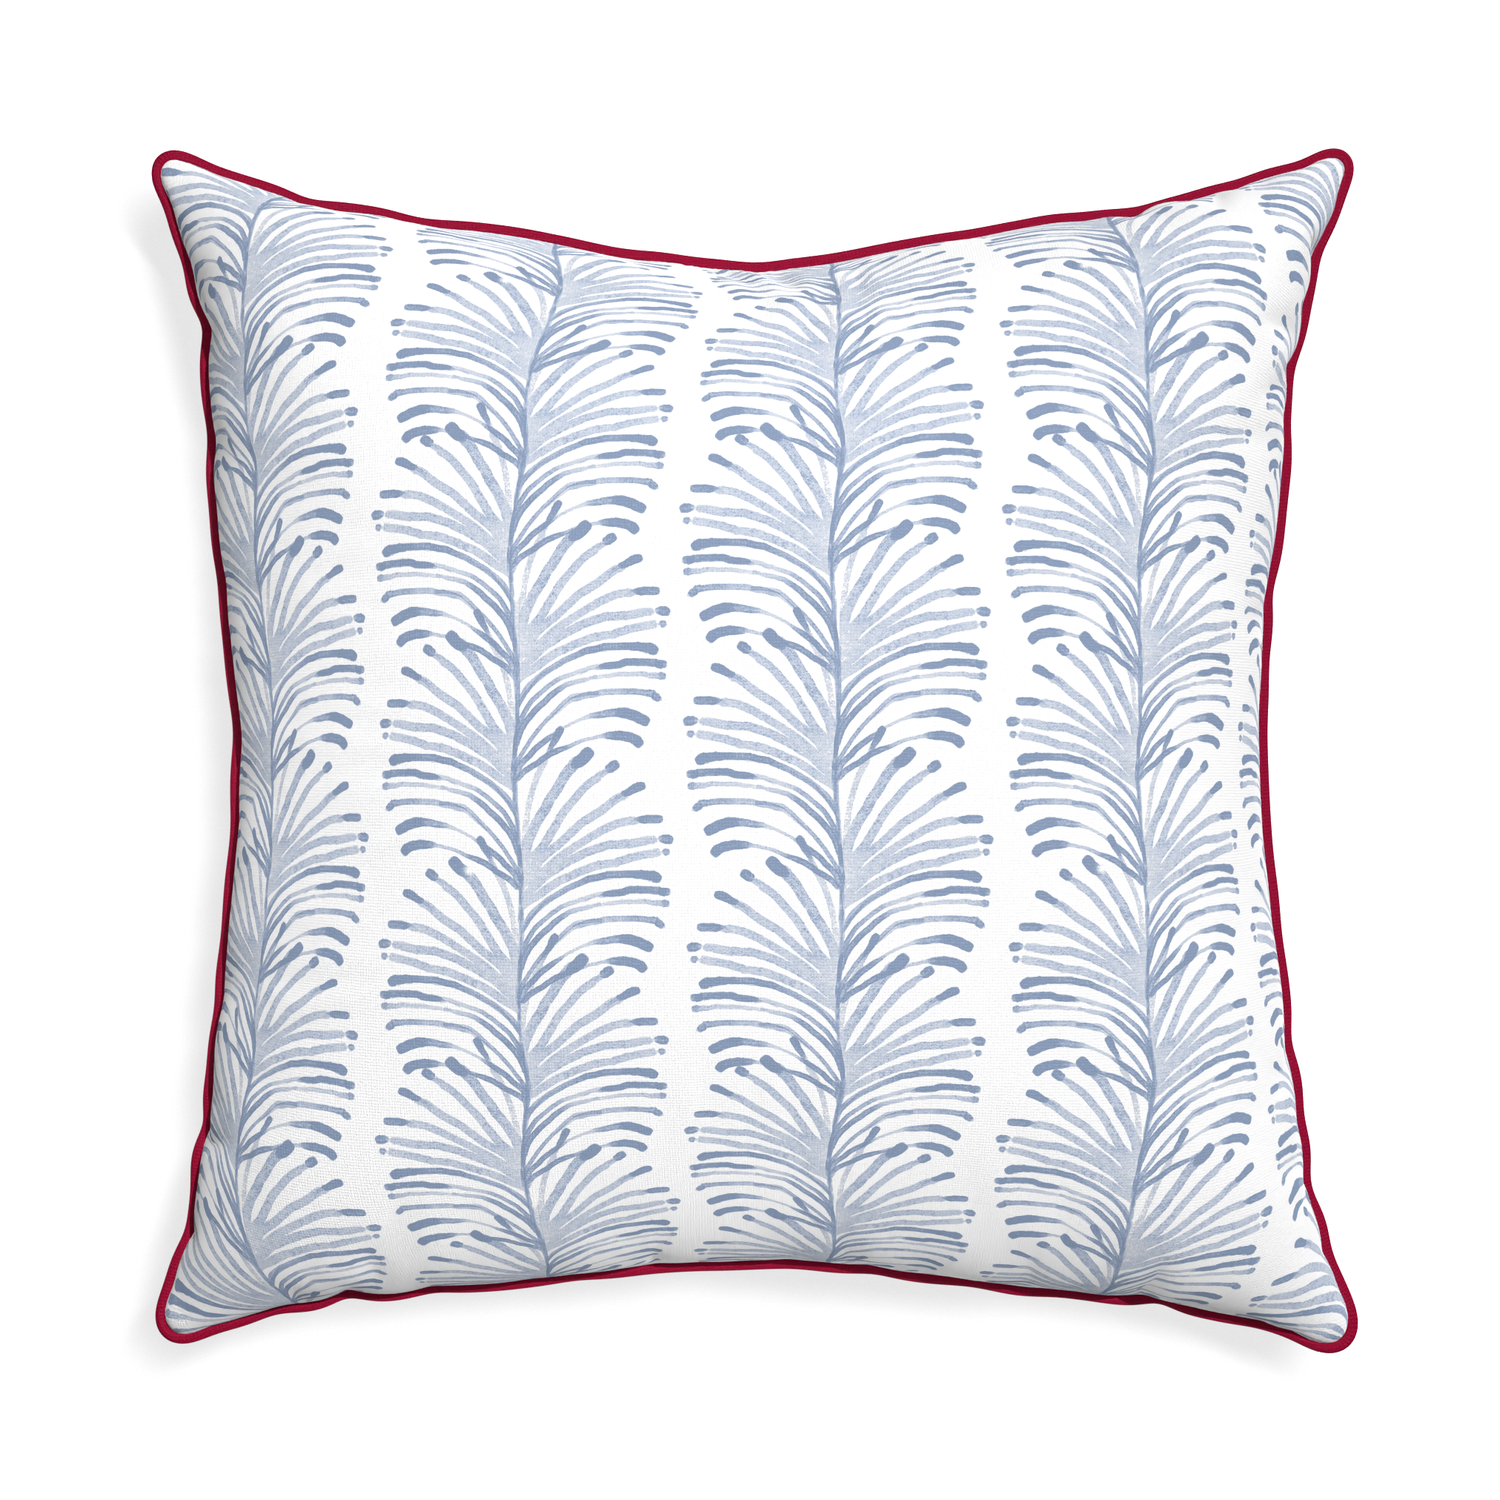 Euro-sham emma sky custom pillow with raspberry piping on white background